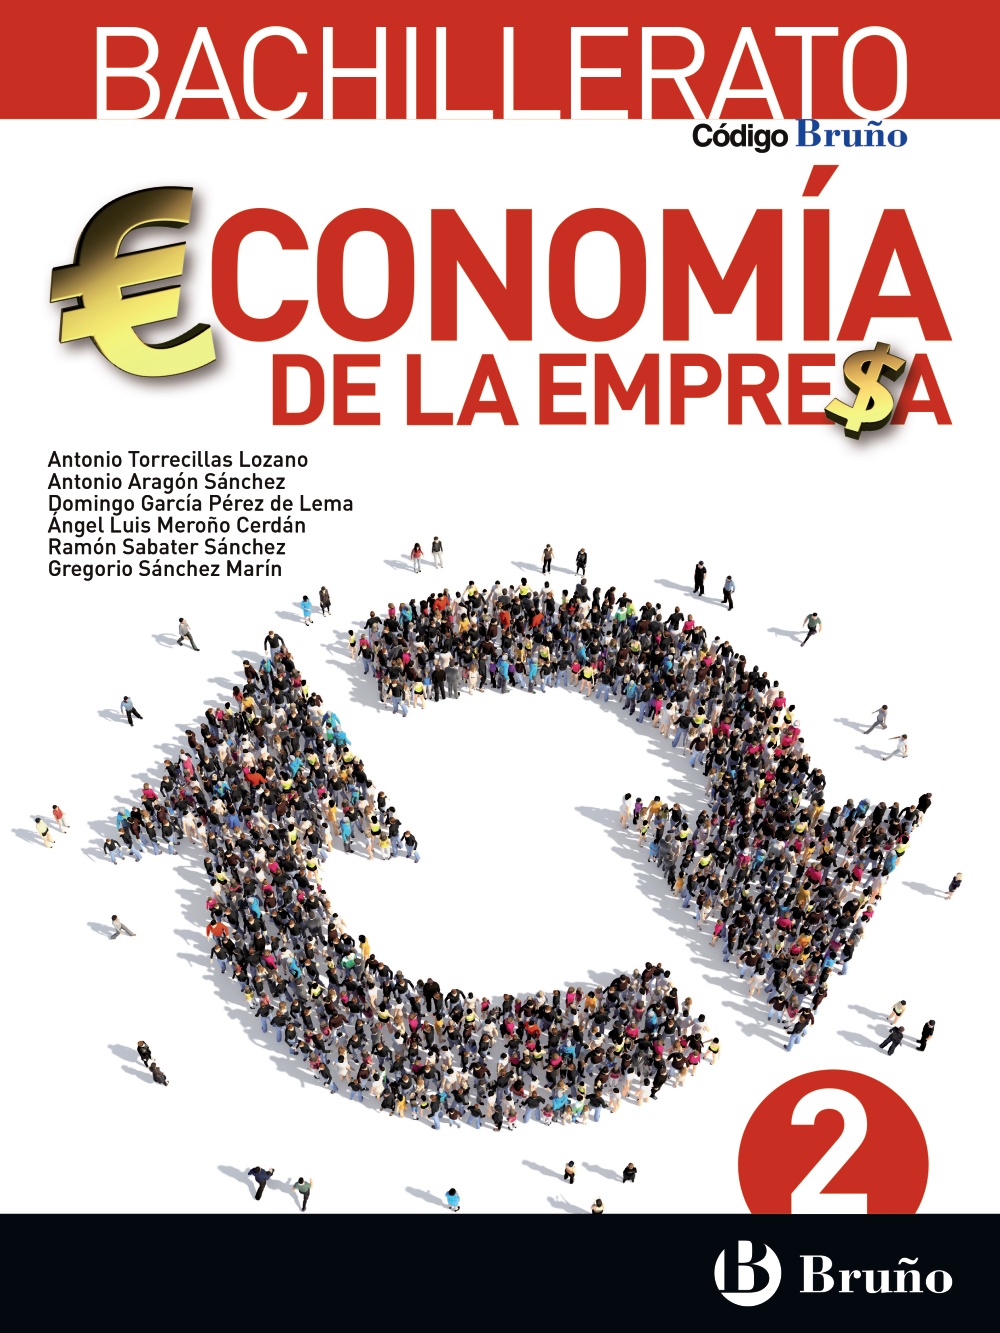 Solucionario Economia de la Empresa 2 Bachillerato Bruño-pdf